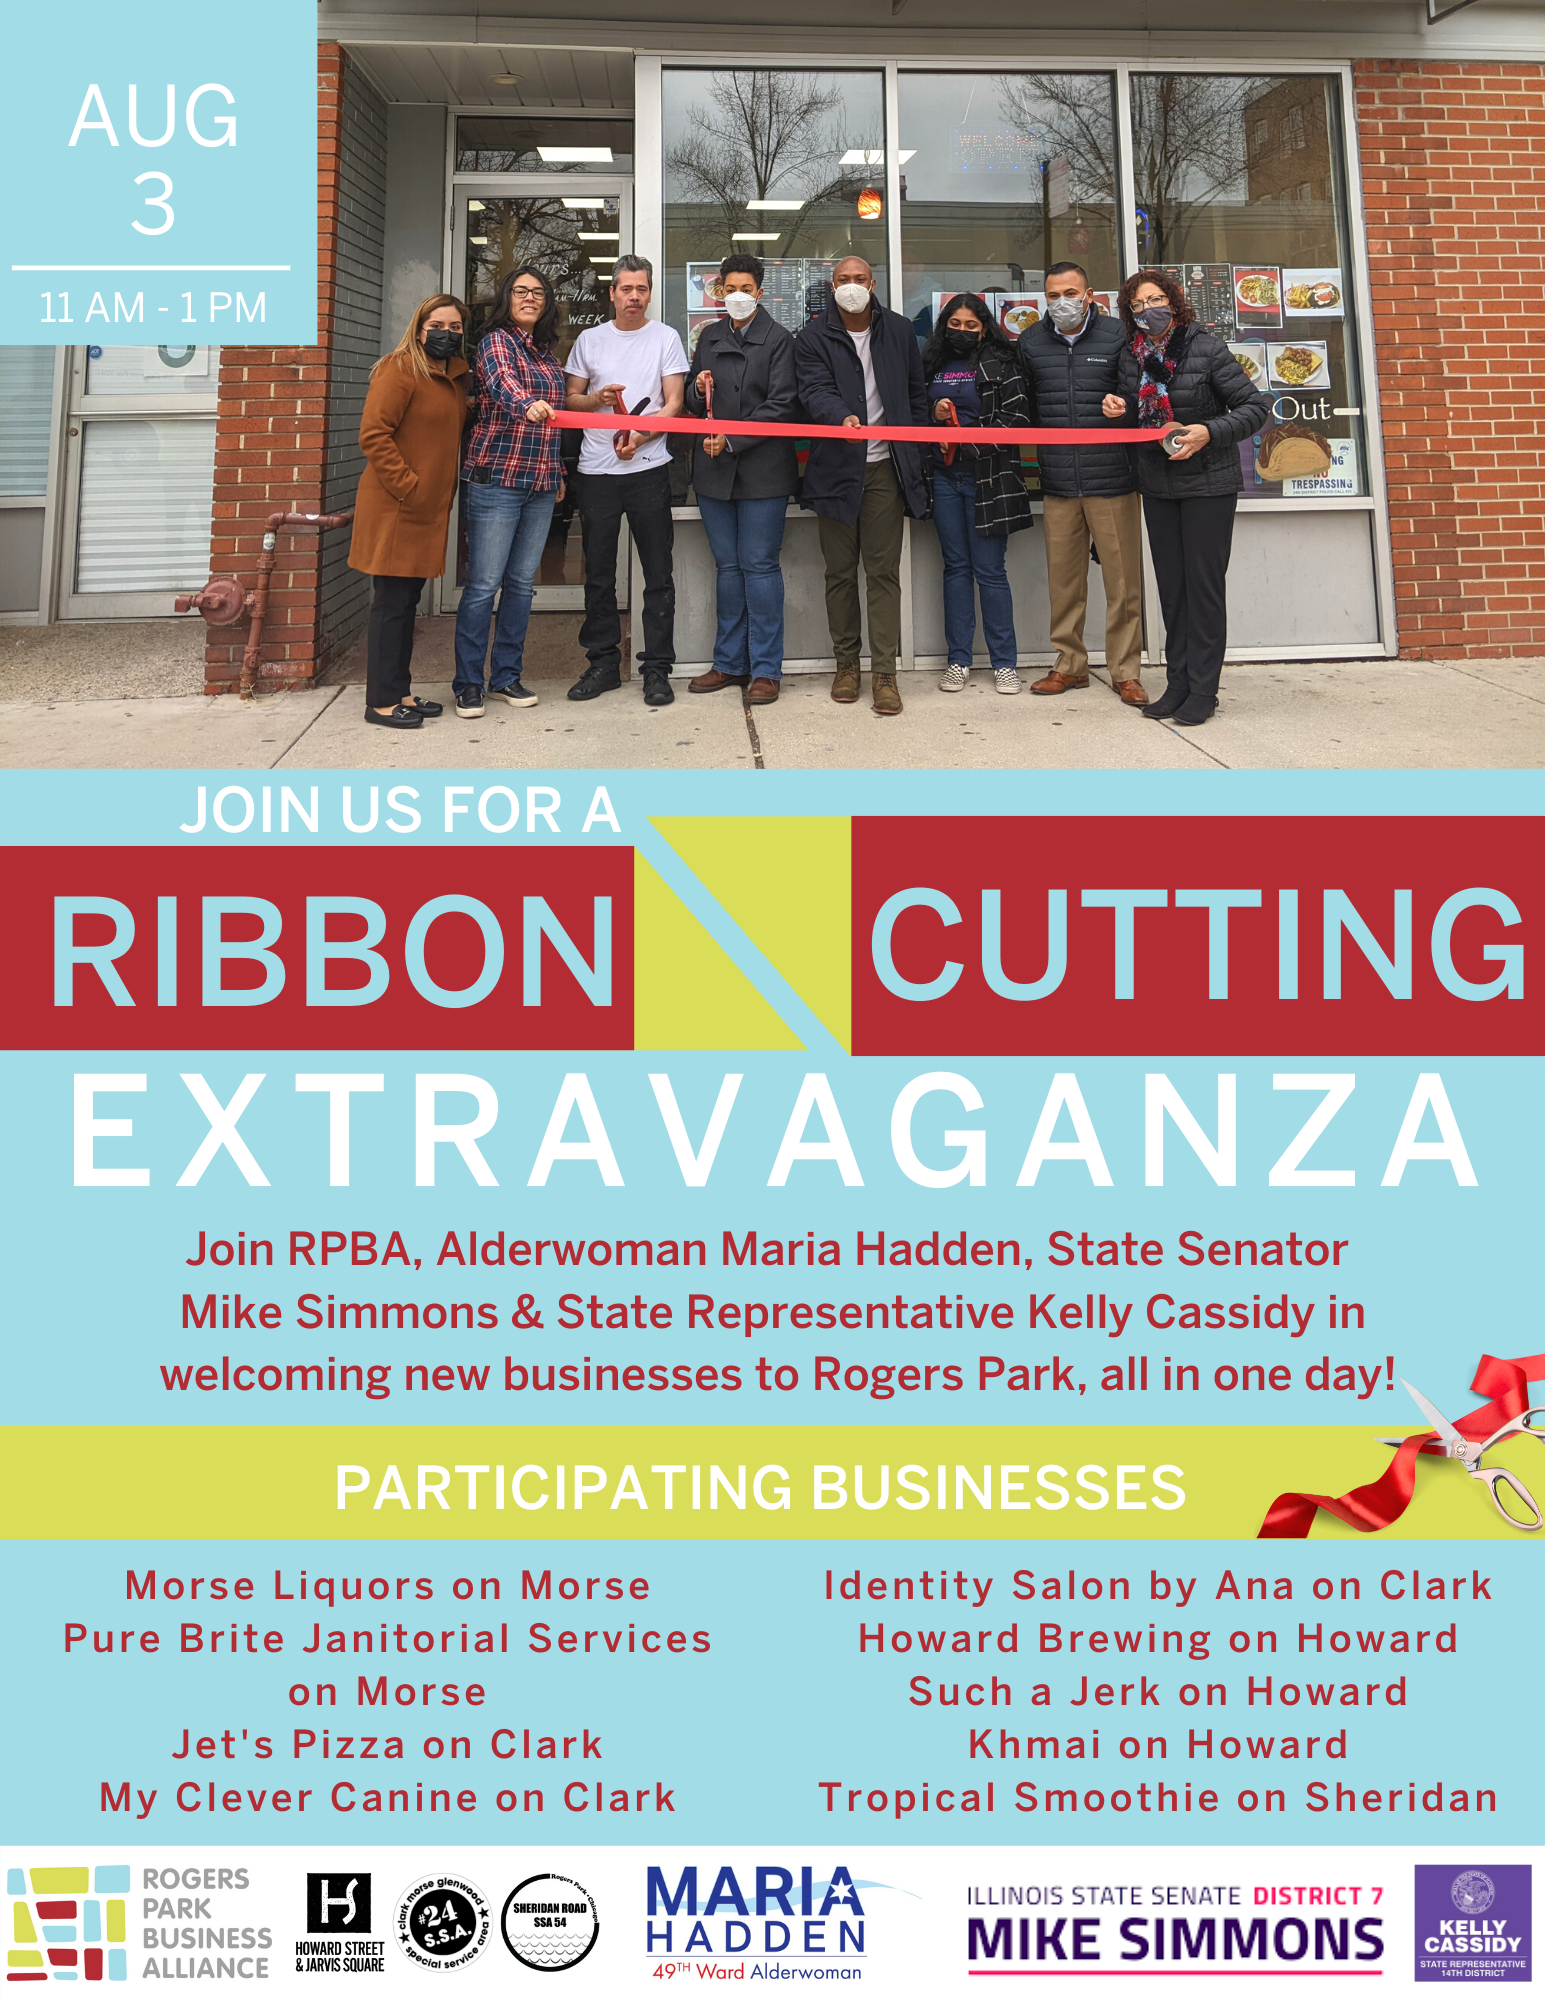 Ribbon Cutting Extravanza, rogers-park-business-alliance